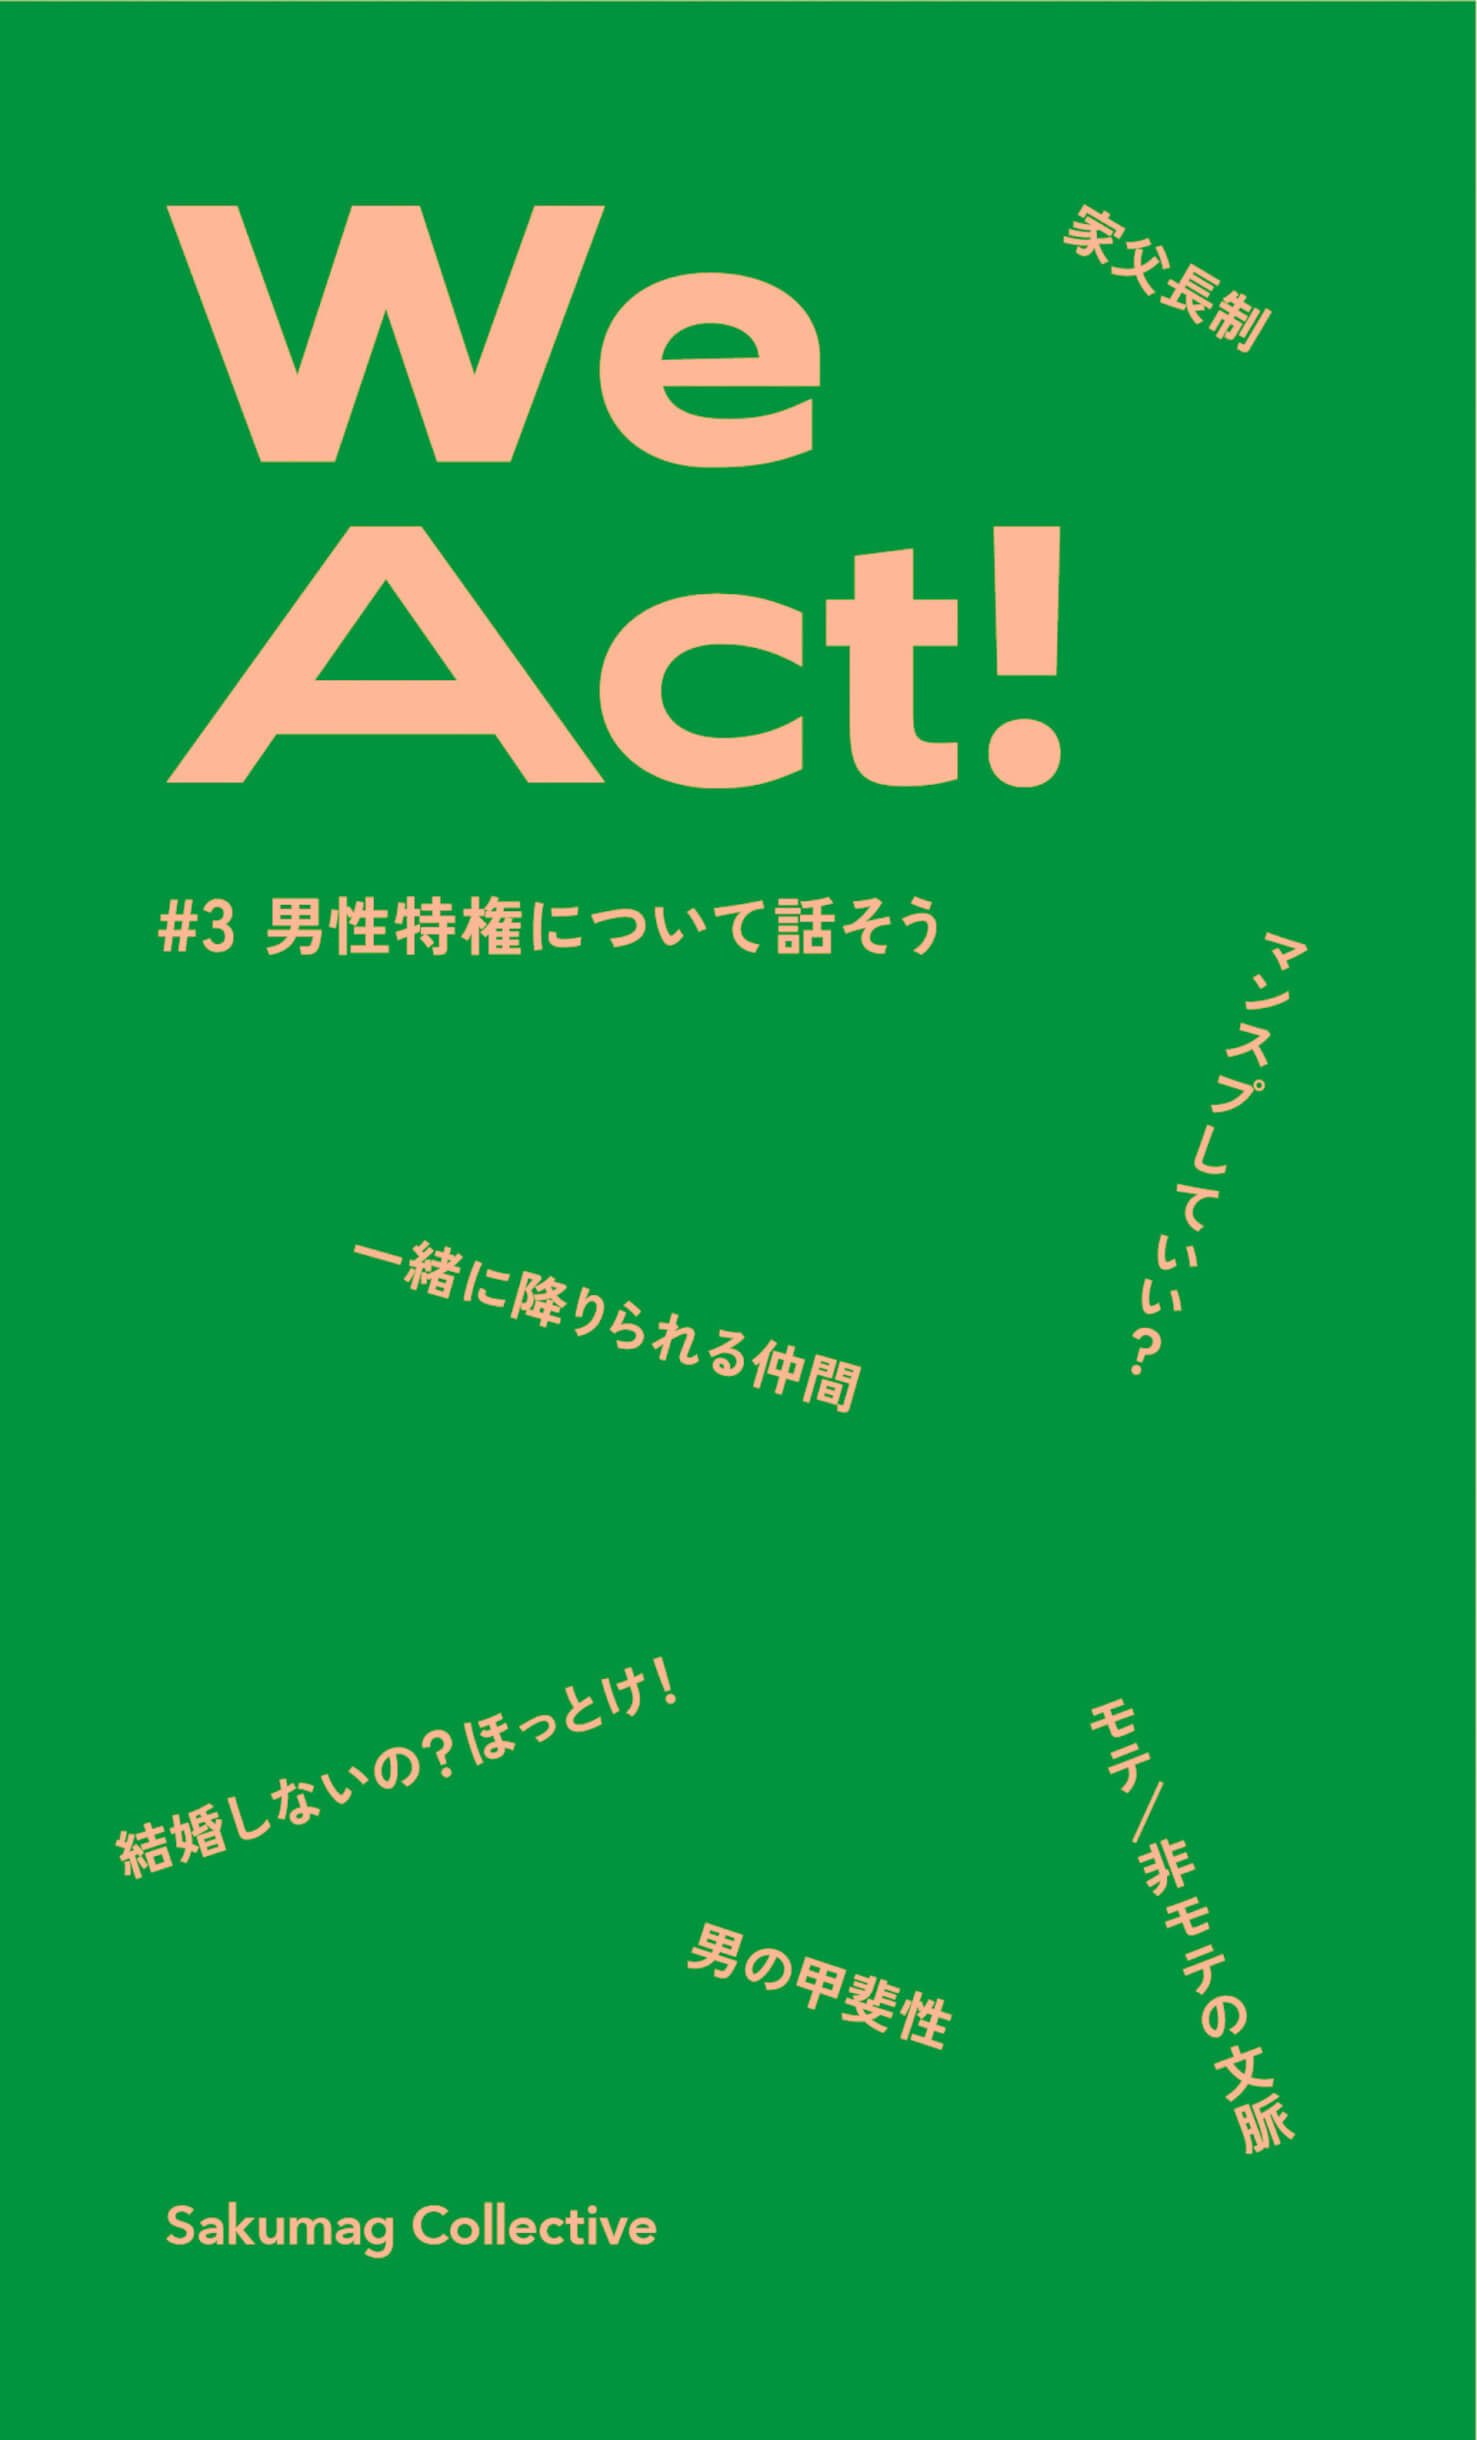 『We Act! ＃3 男性特権について話そう』出版｜佐久間裕美子主宰「Sakumag Collective」、クラウドファンディングも実施 life221031-sakumag-collective-02